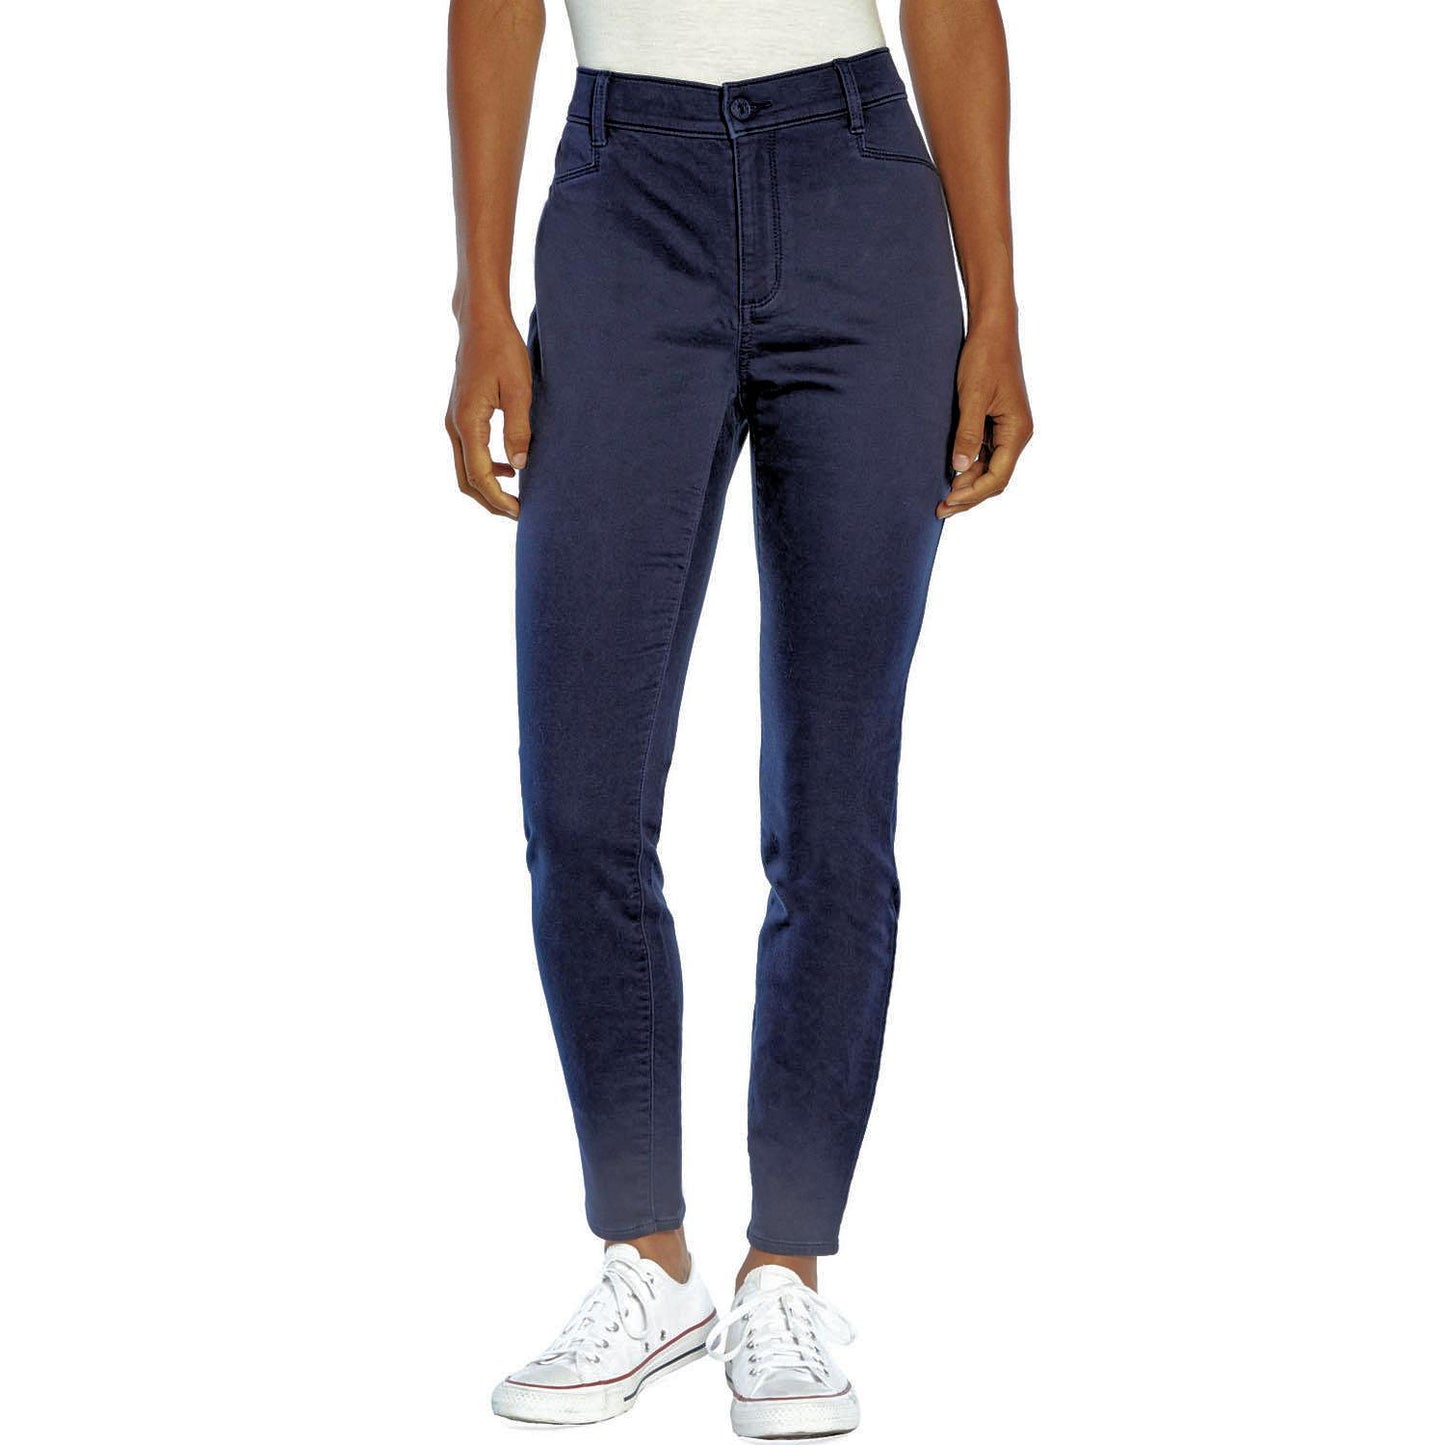 Gap Comfort Stretch Skinny Pants Choose Color Size